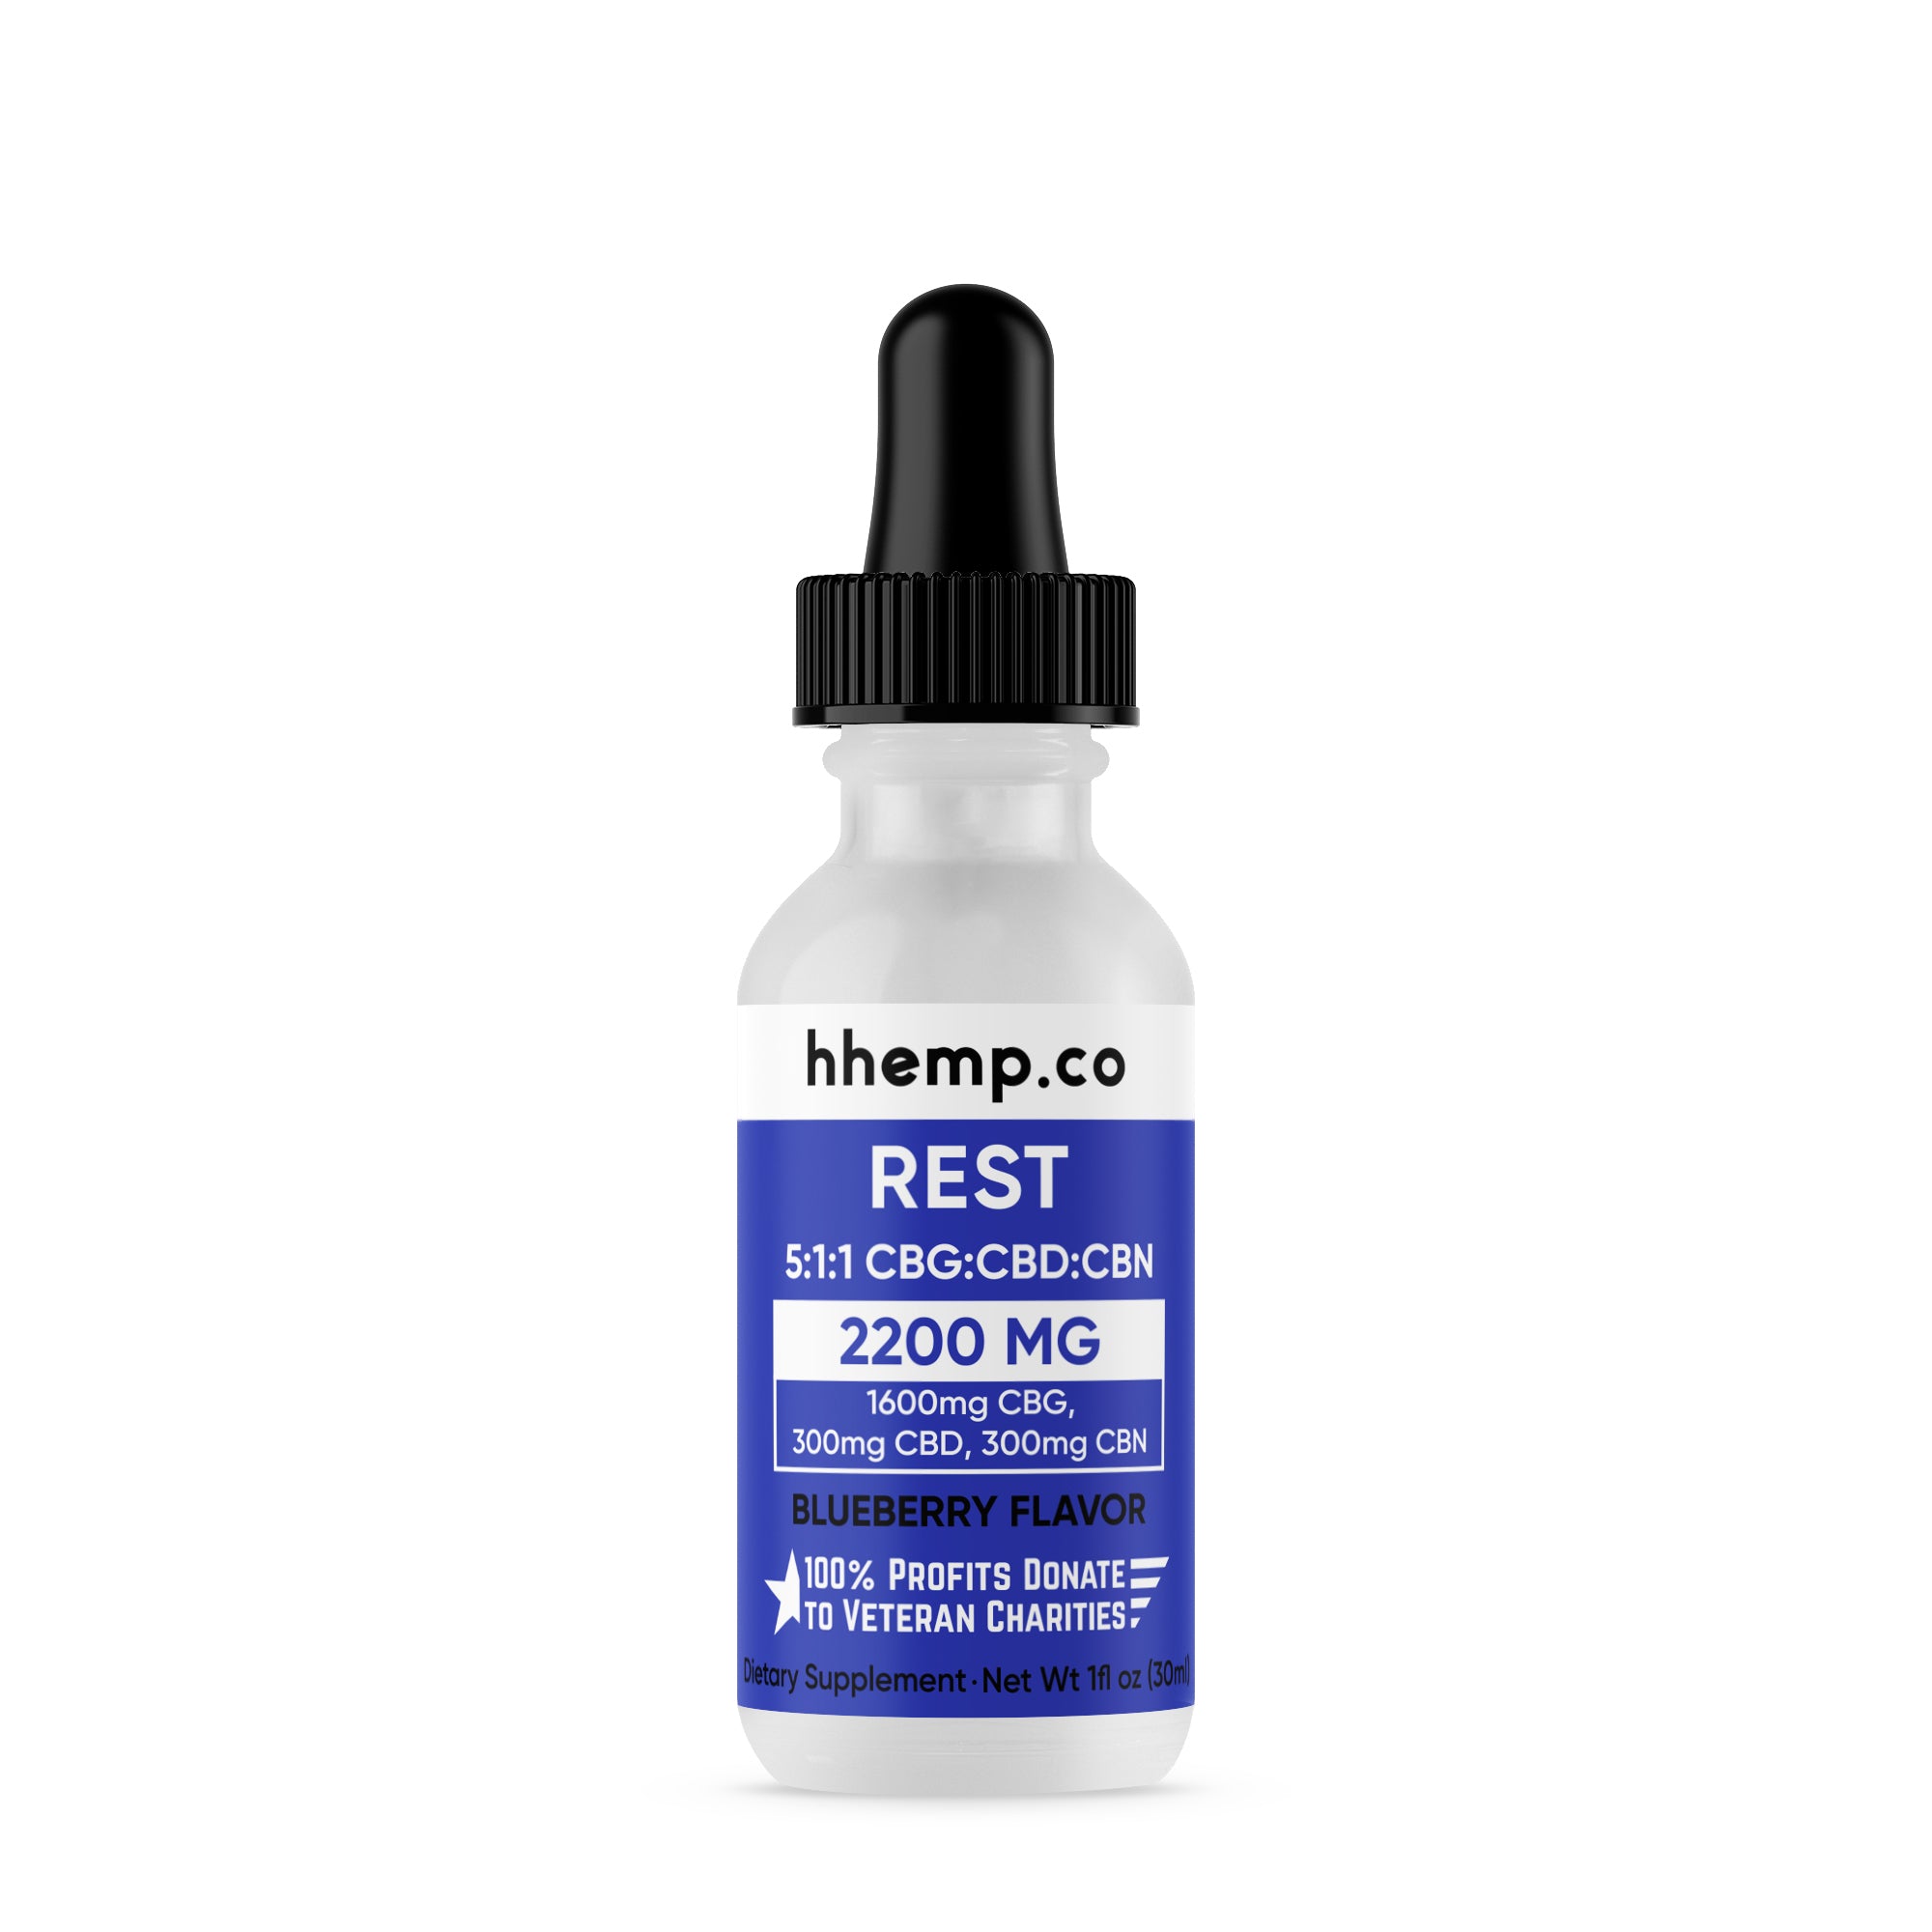 hhemp.co CBG + CBD Tincture - Rest (Blueberry Flavor)